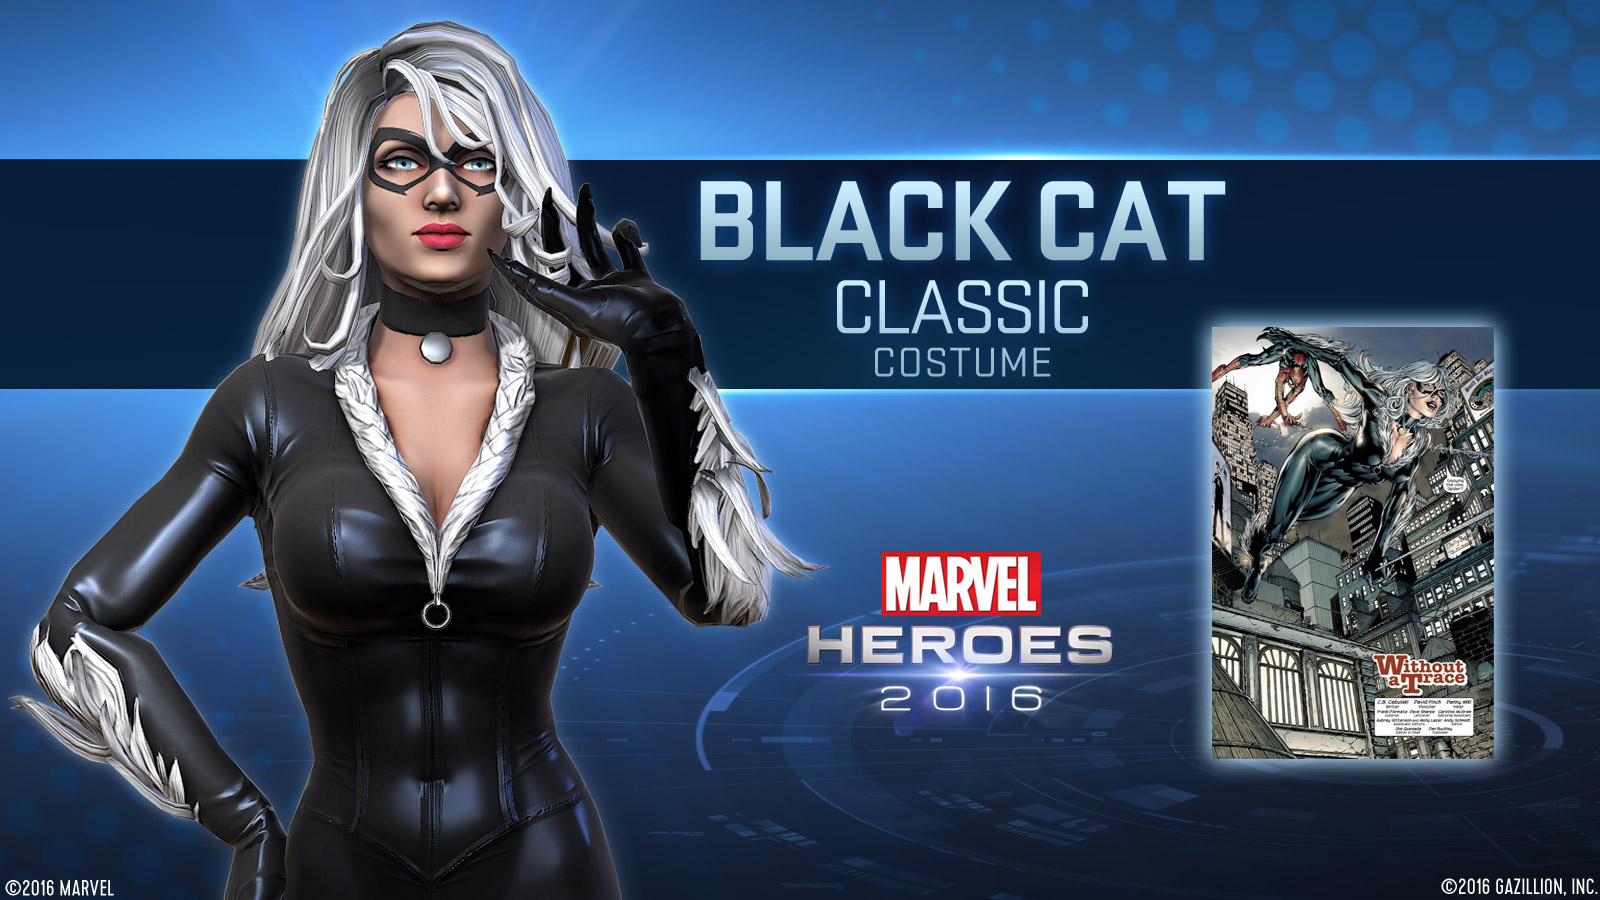 Closeup BlackCat classic2 Marvel Heroes 2016 Kicks Off Today